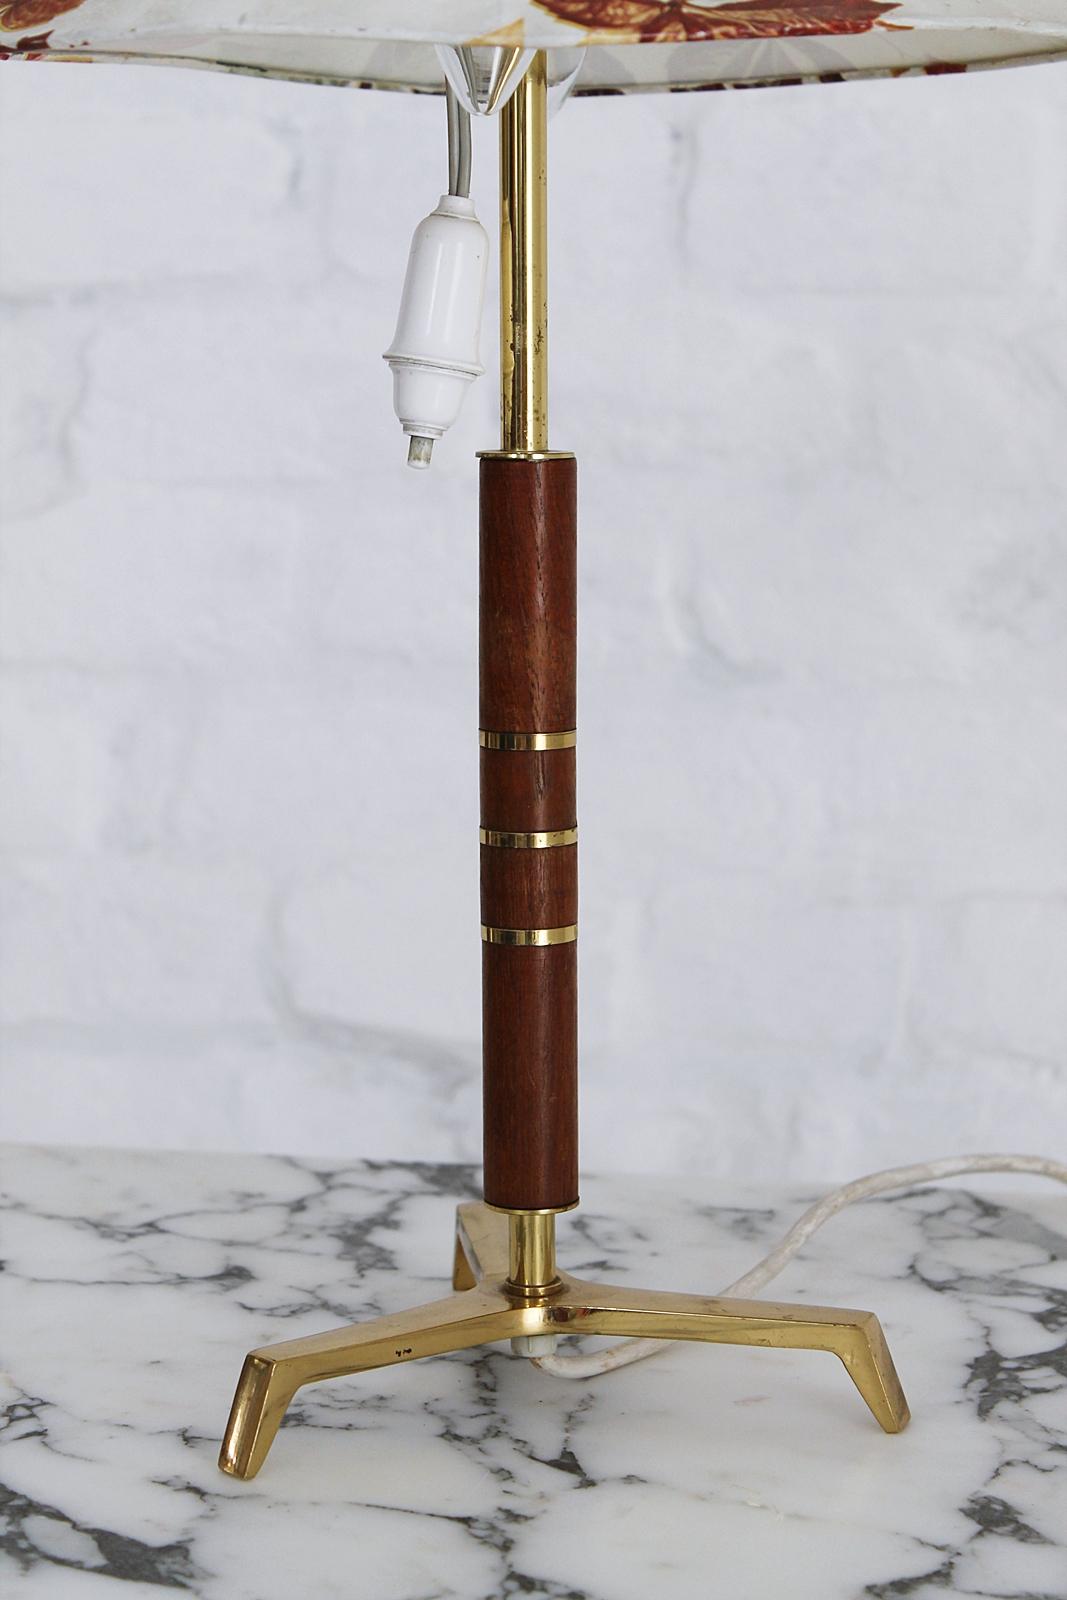 Austrian Rare Midcentury Tripod Table Lamp Attributed to J. T. Kalmar, Austria, 1950 For Sale